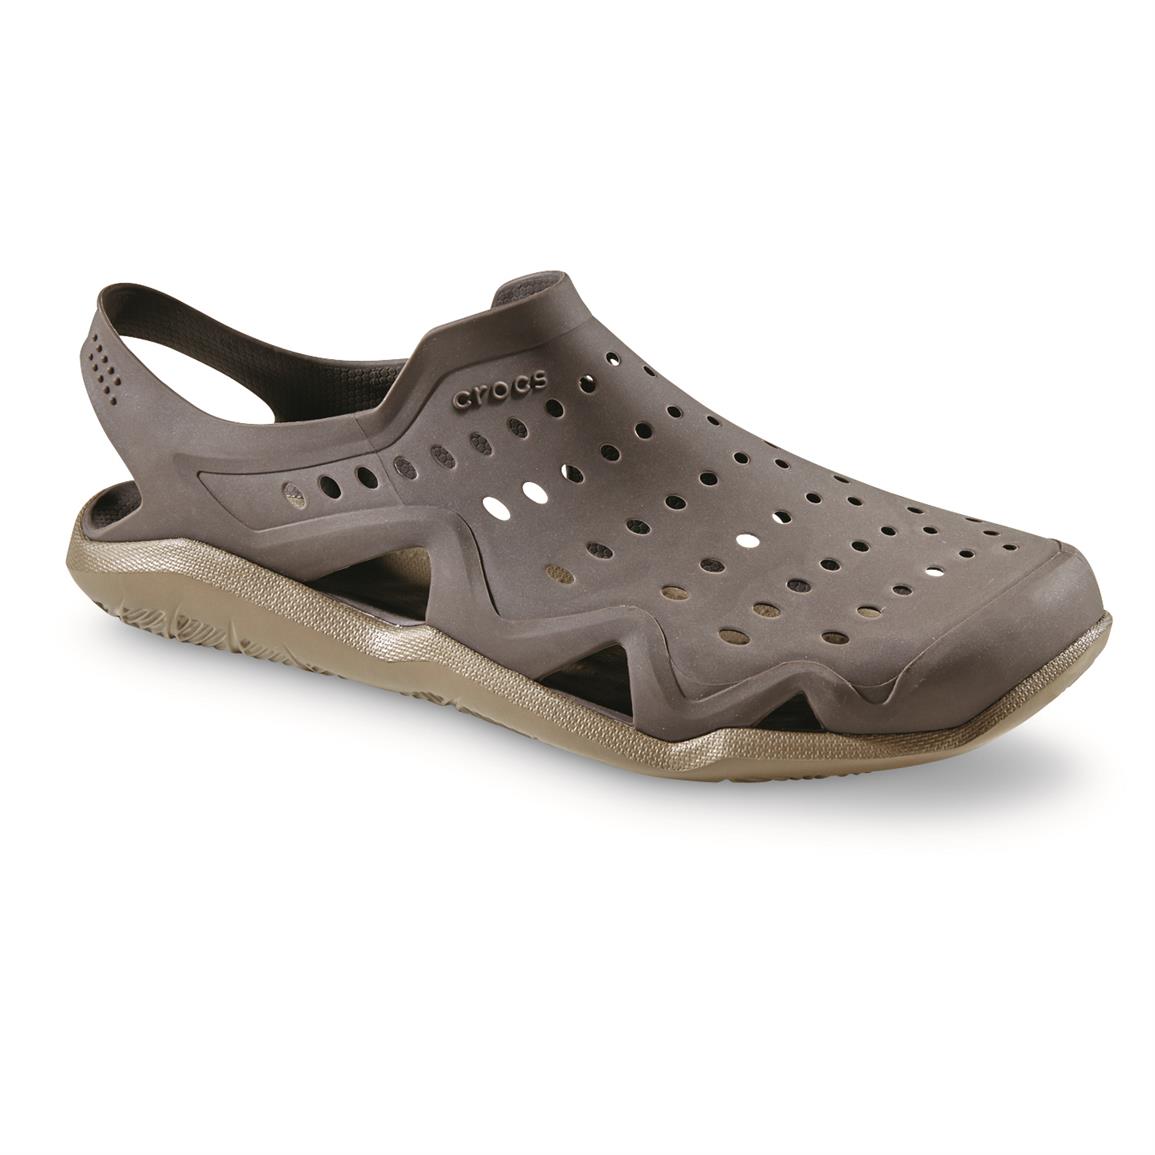  Crocs  Men s Swiftwater Wave Water  Shoes  676206 Sandals 